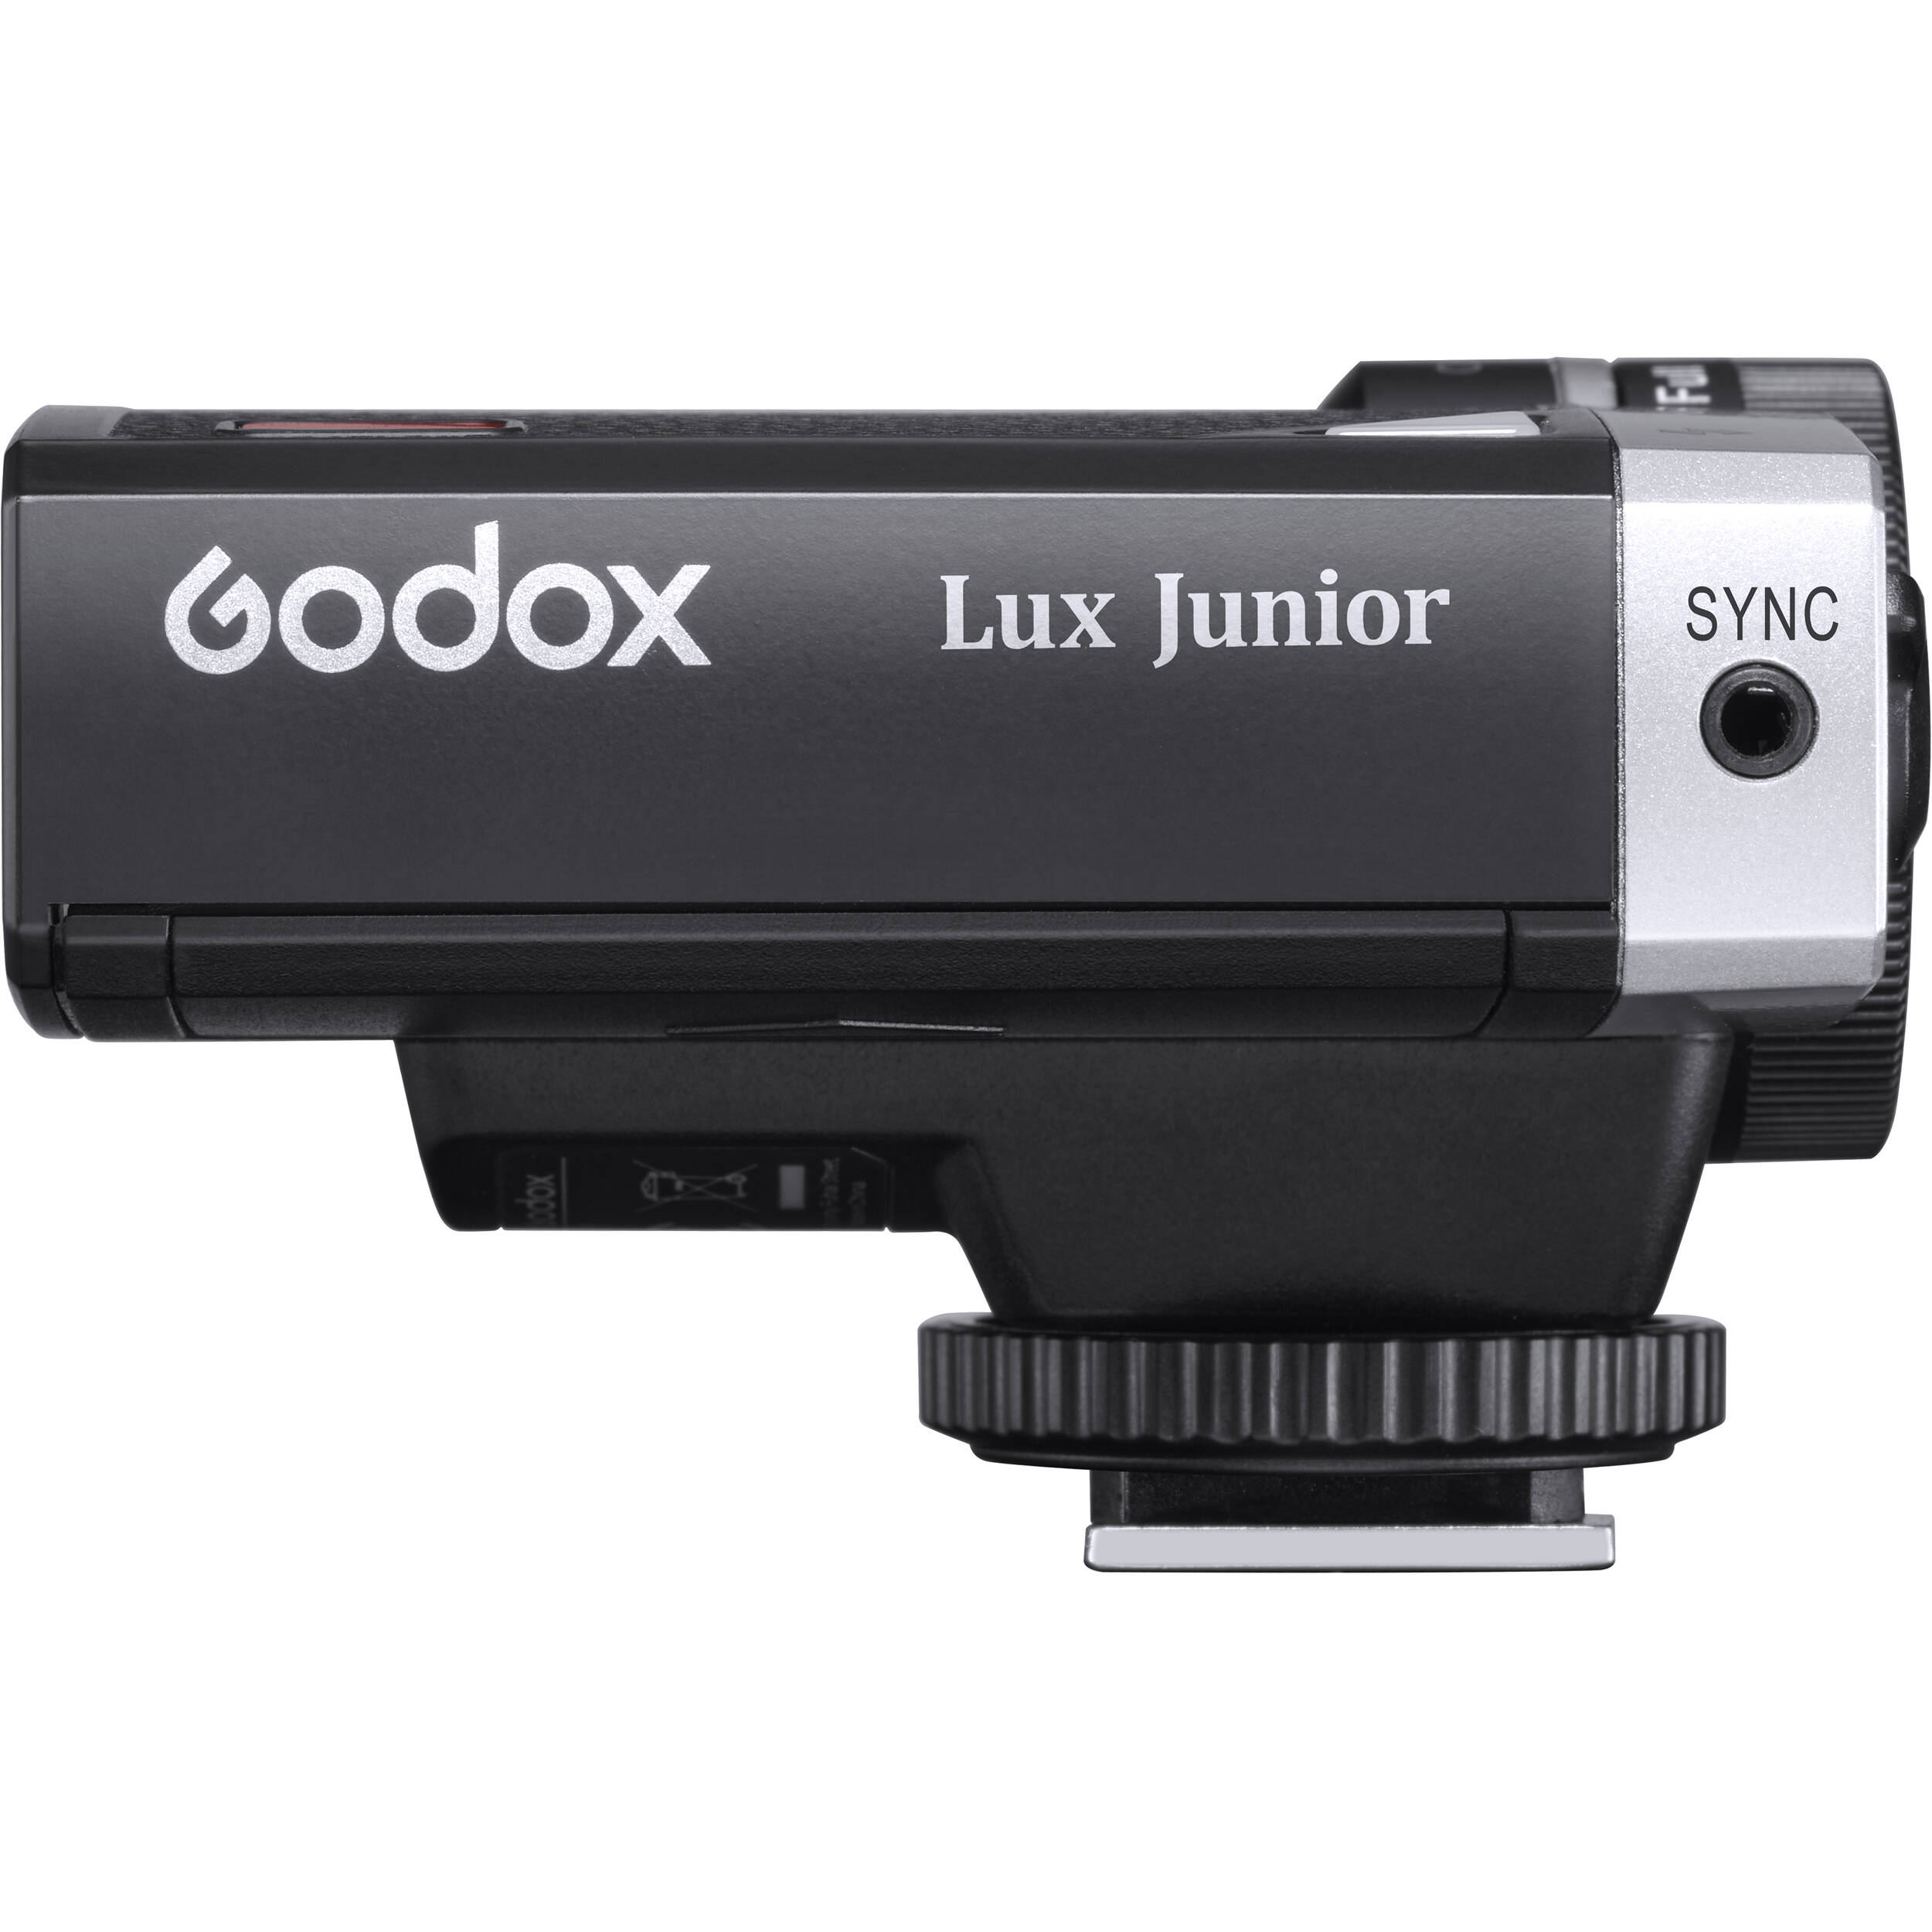    Godox LUX Junior   Ultra-mart